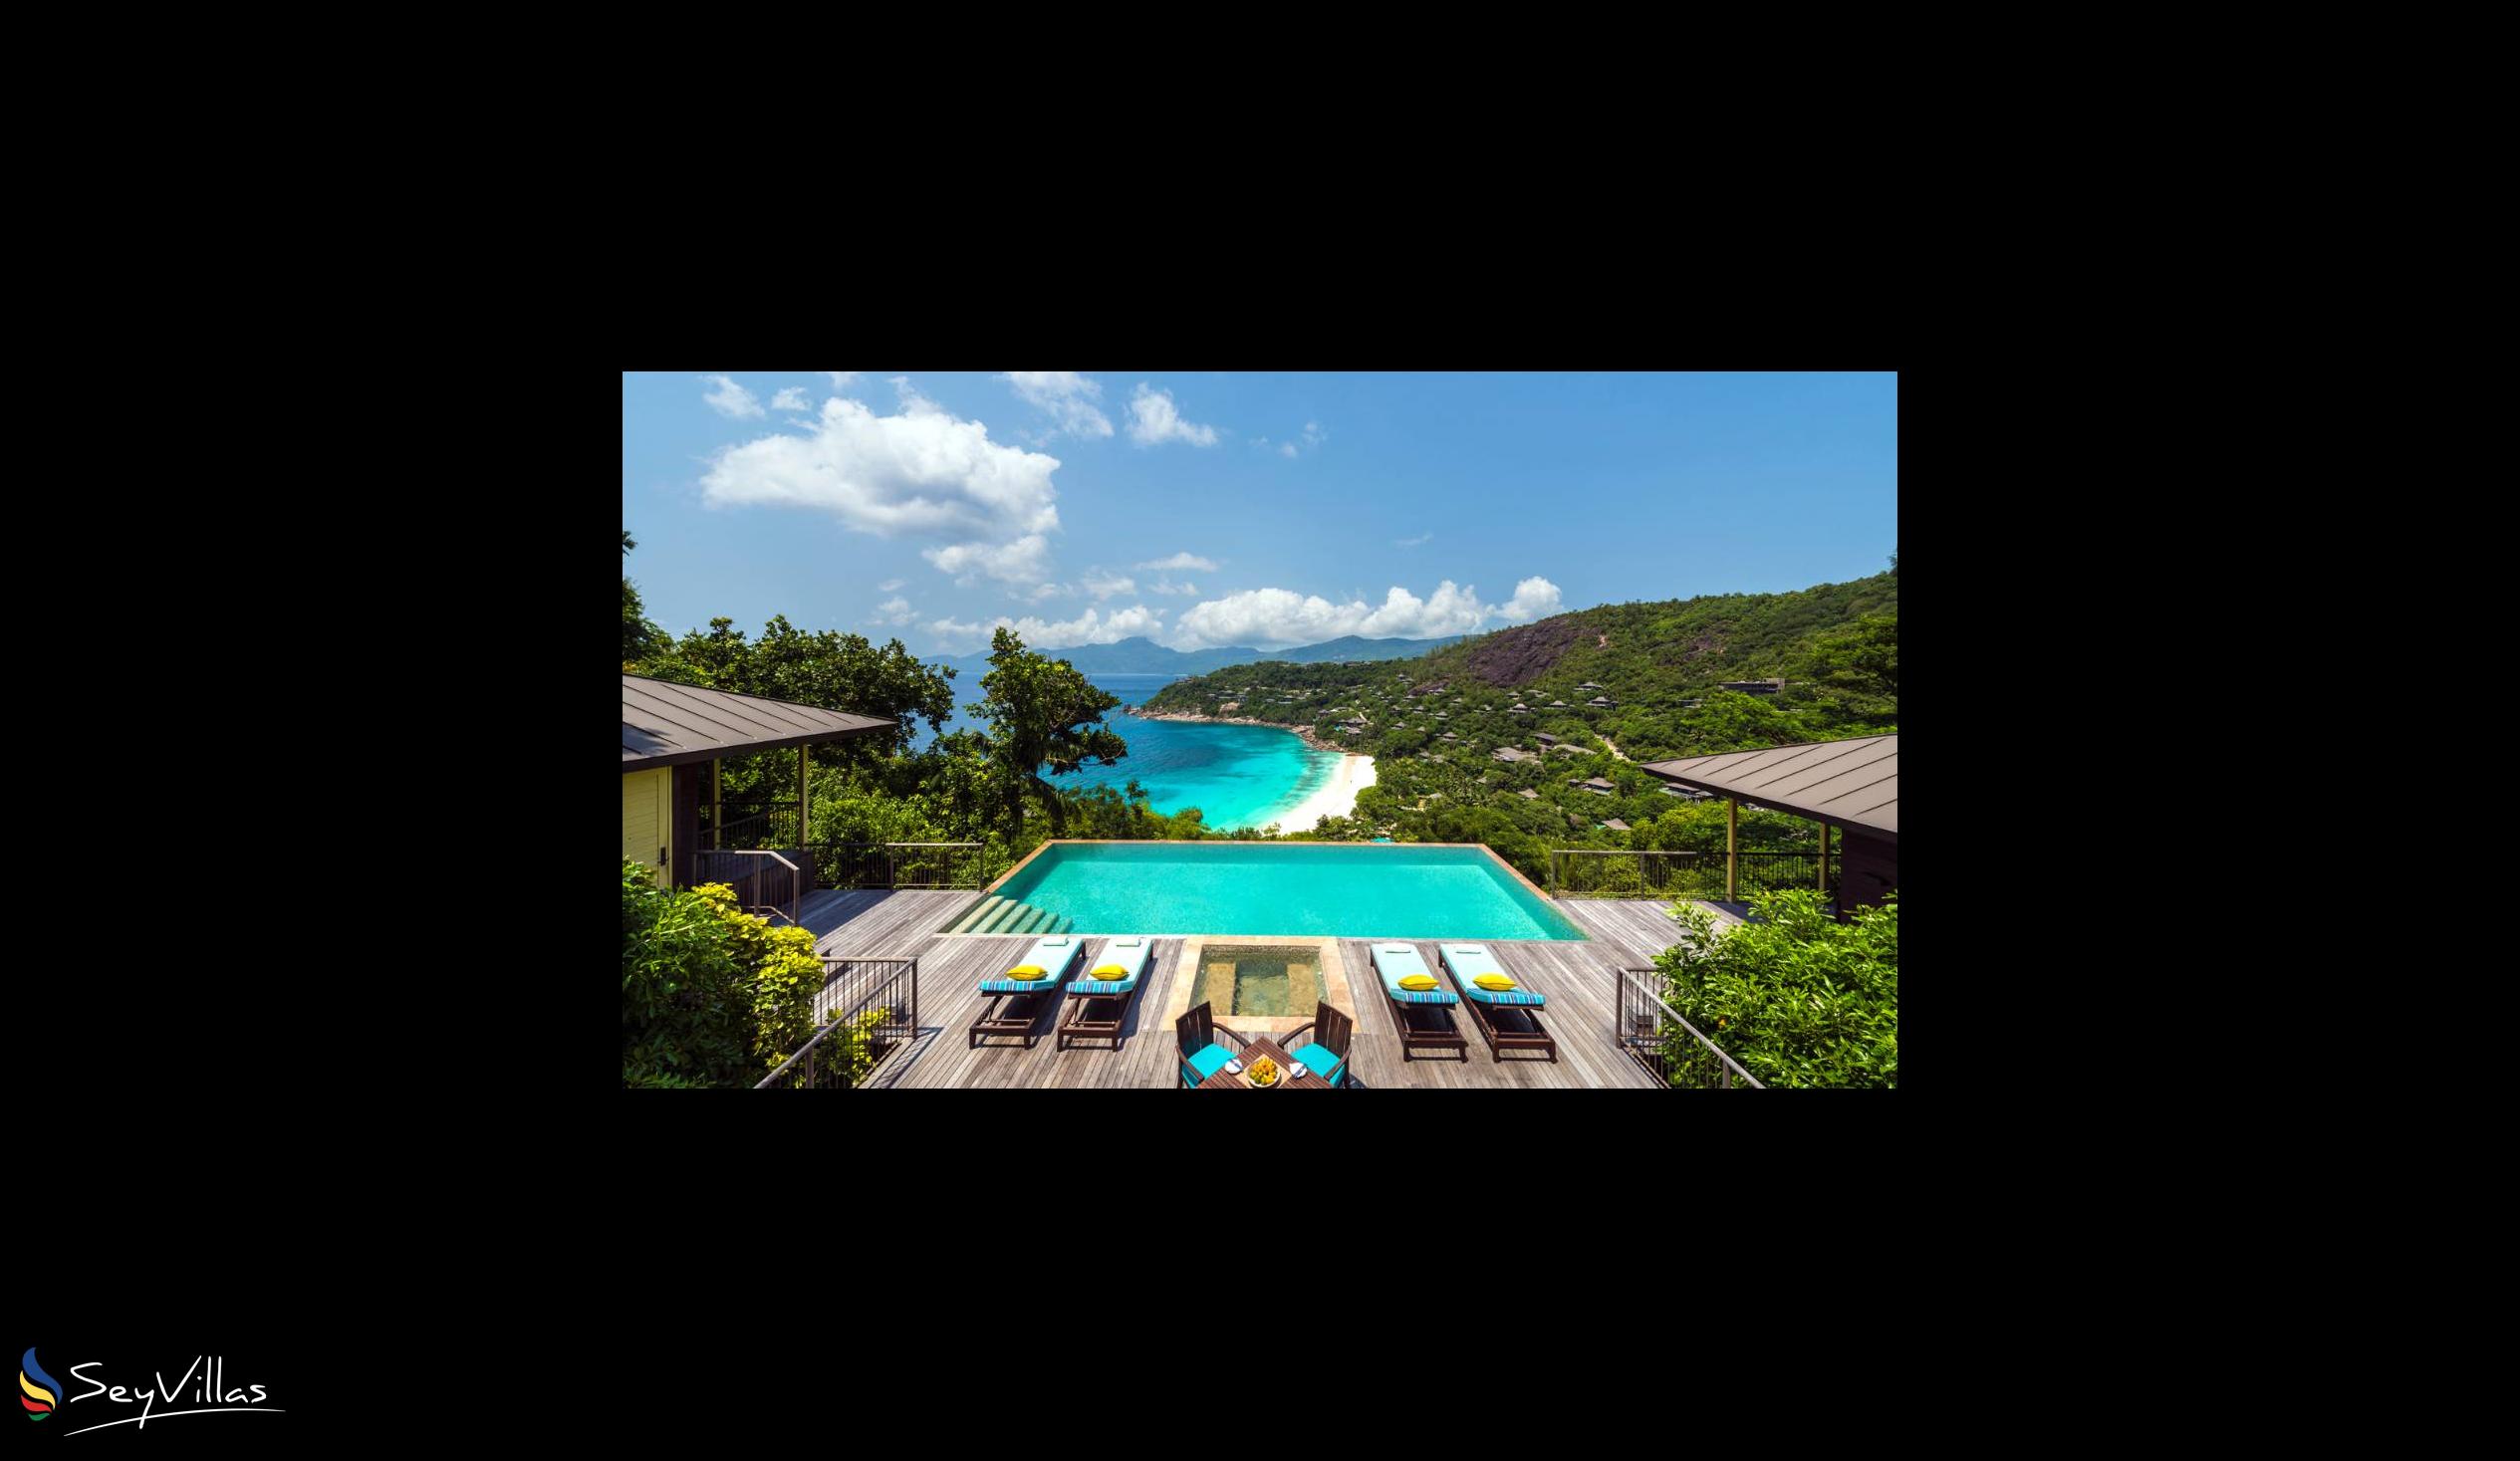 Foto 26: Four Seasons Resort - 2-Bedroom Hilltop Ocean View Suite - Mahé (Seychelles)